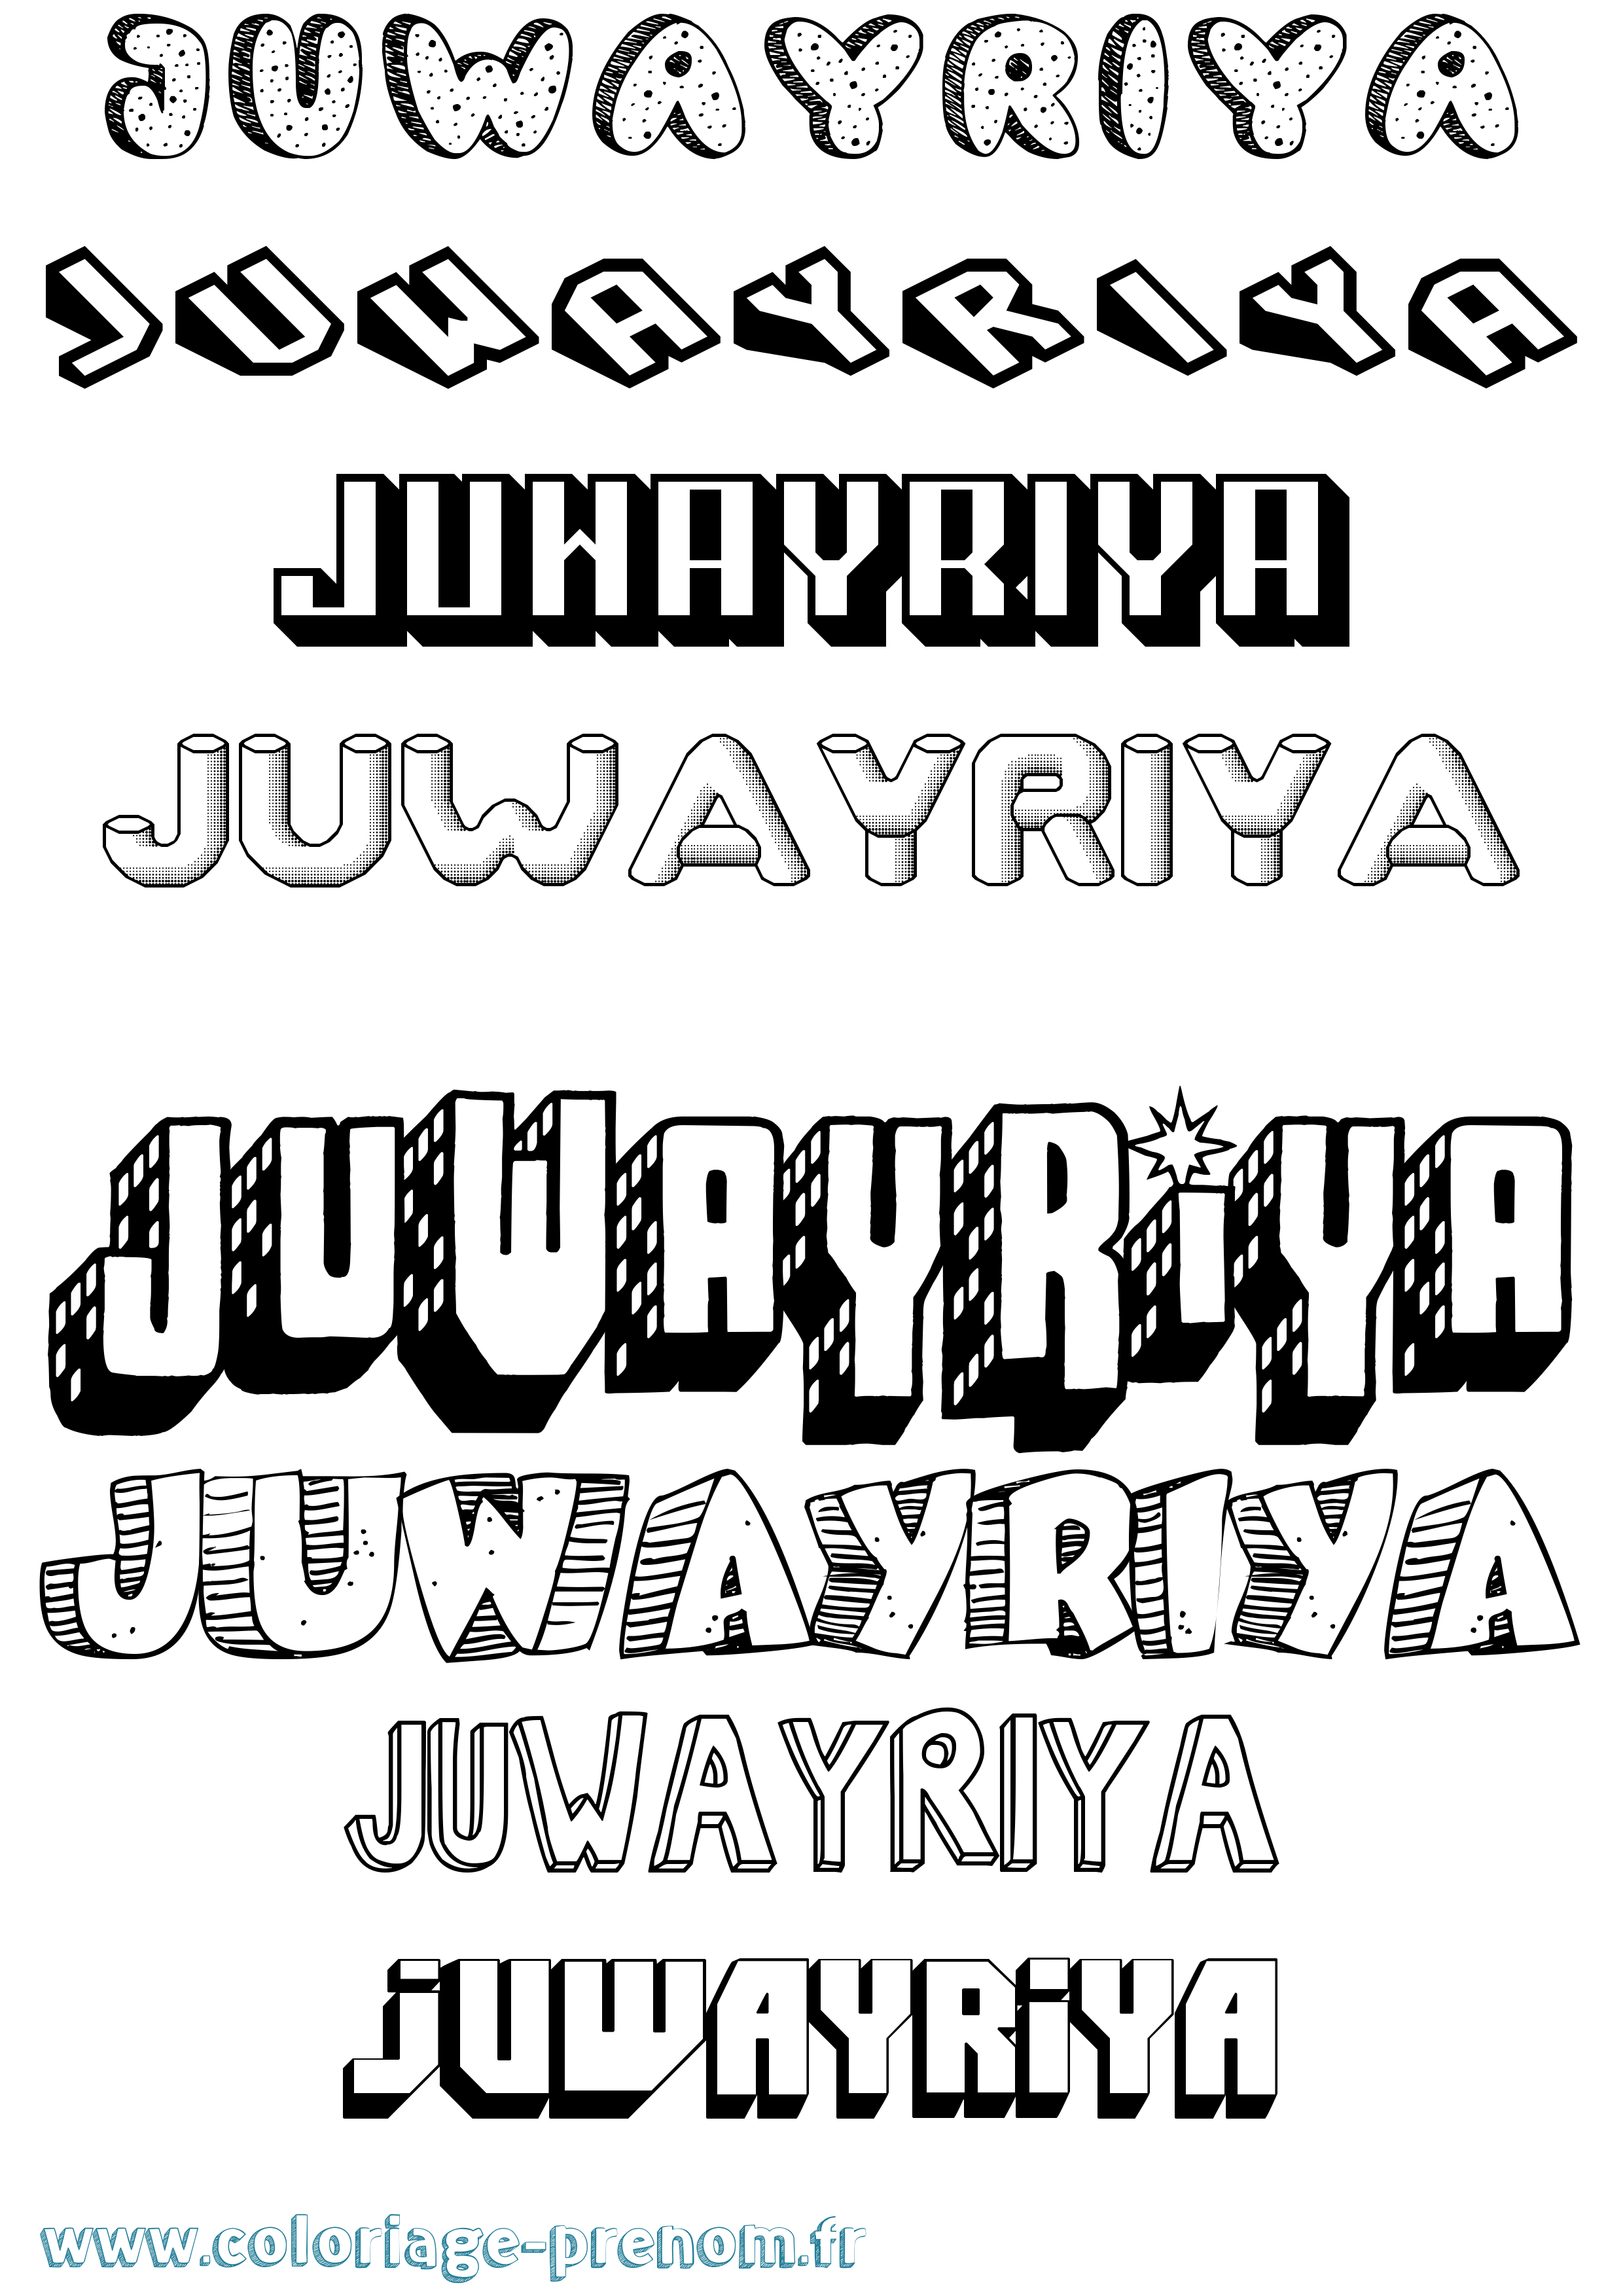 Coloriage prénom Juwayriya Effet 3D